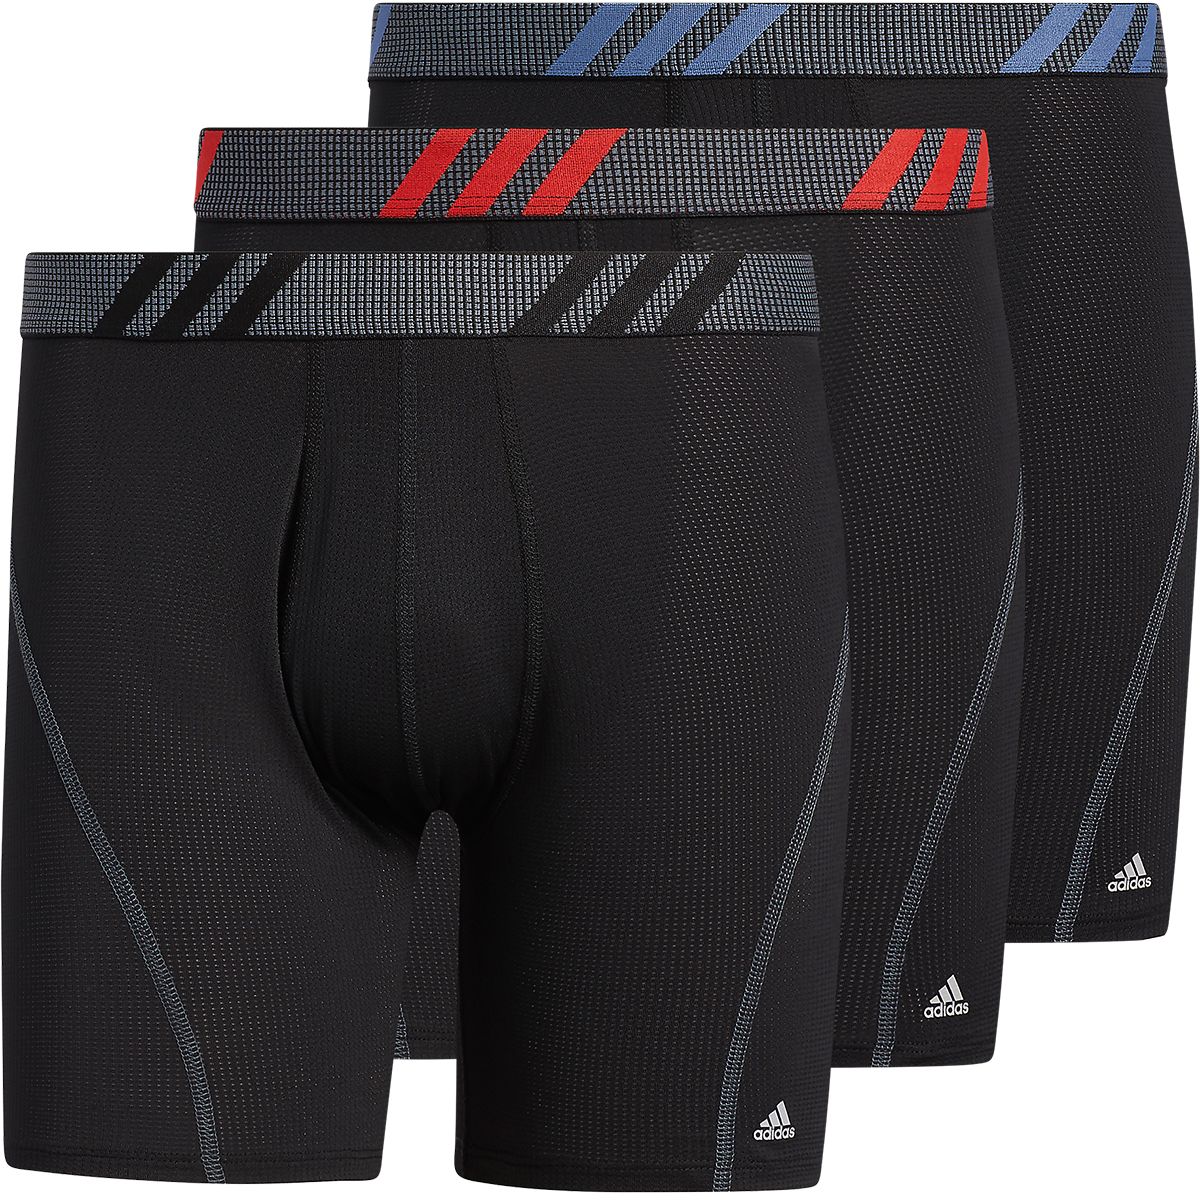 adidas Men's Sport Performance Climacool Boxer Brief Underwear